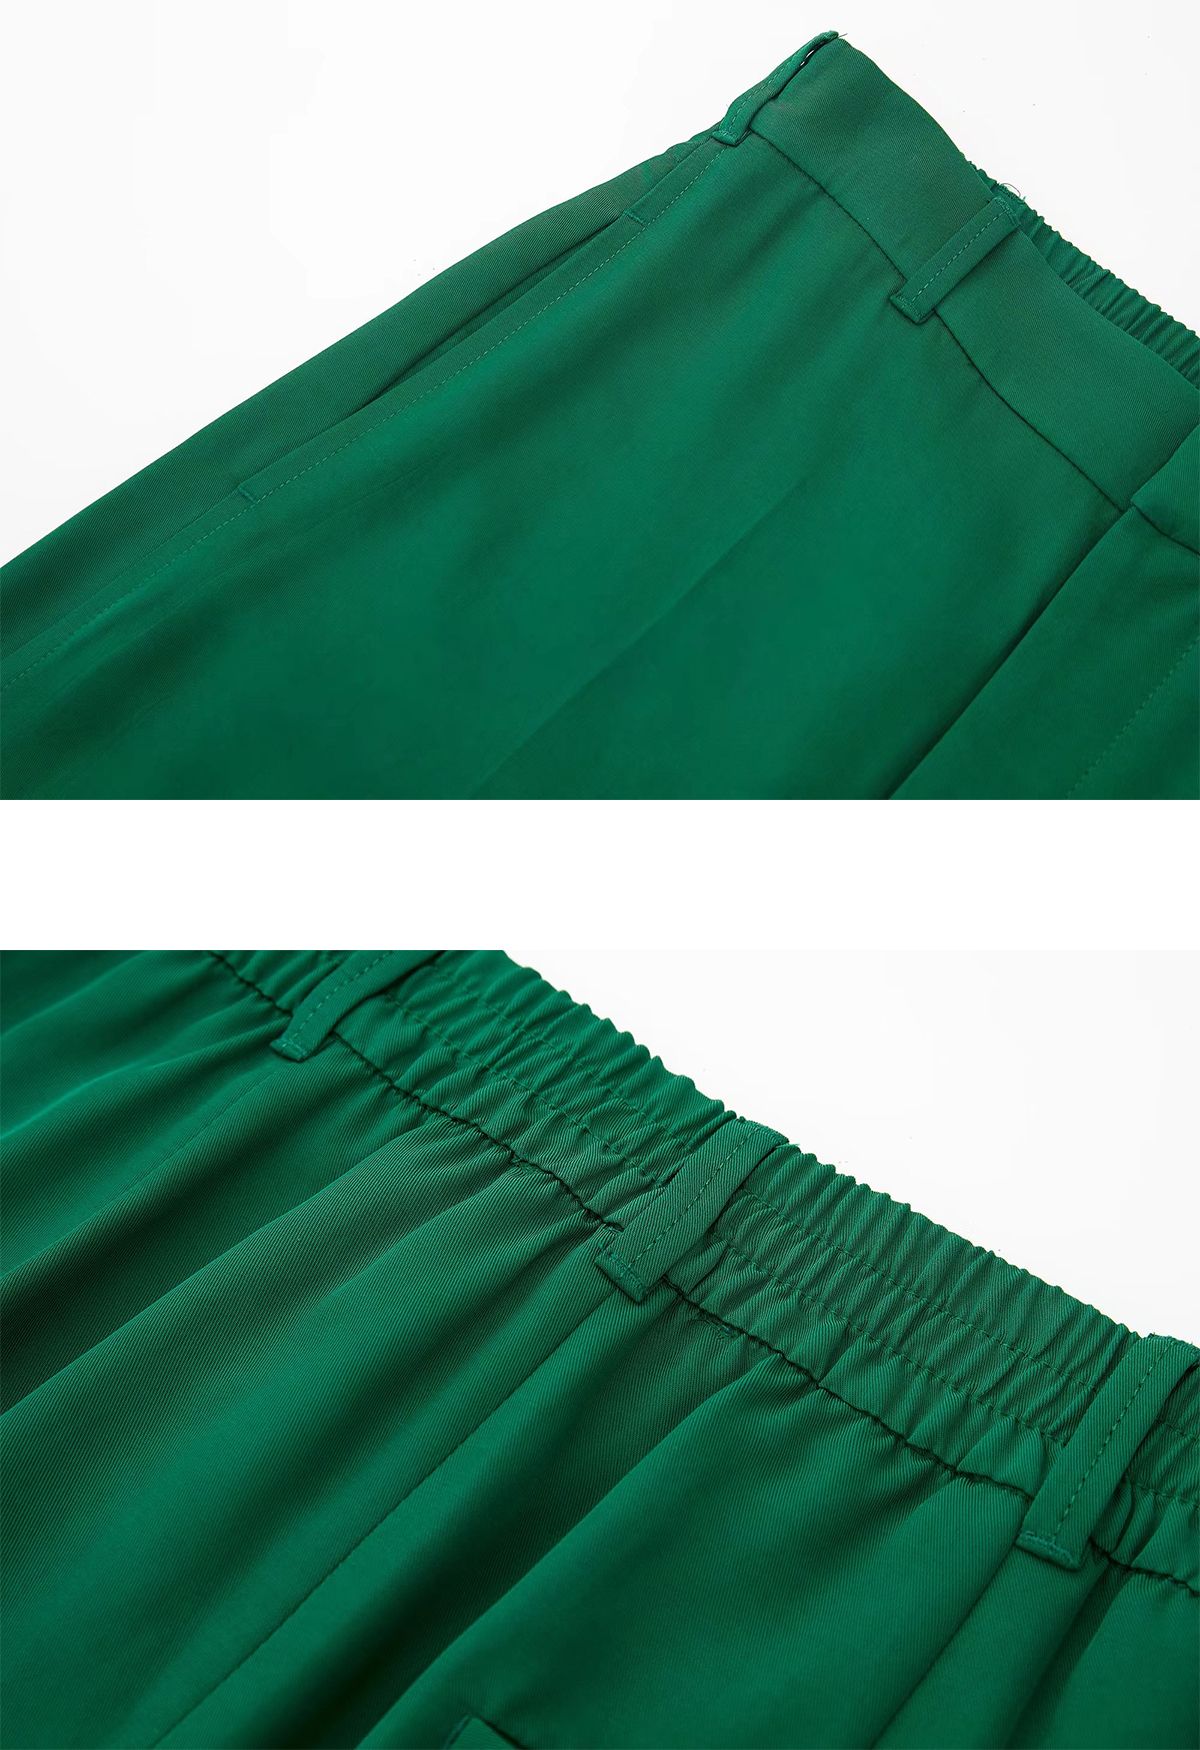 Simplicity Solid Green Drape Straight Leg Pants